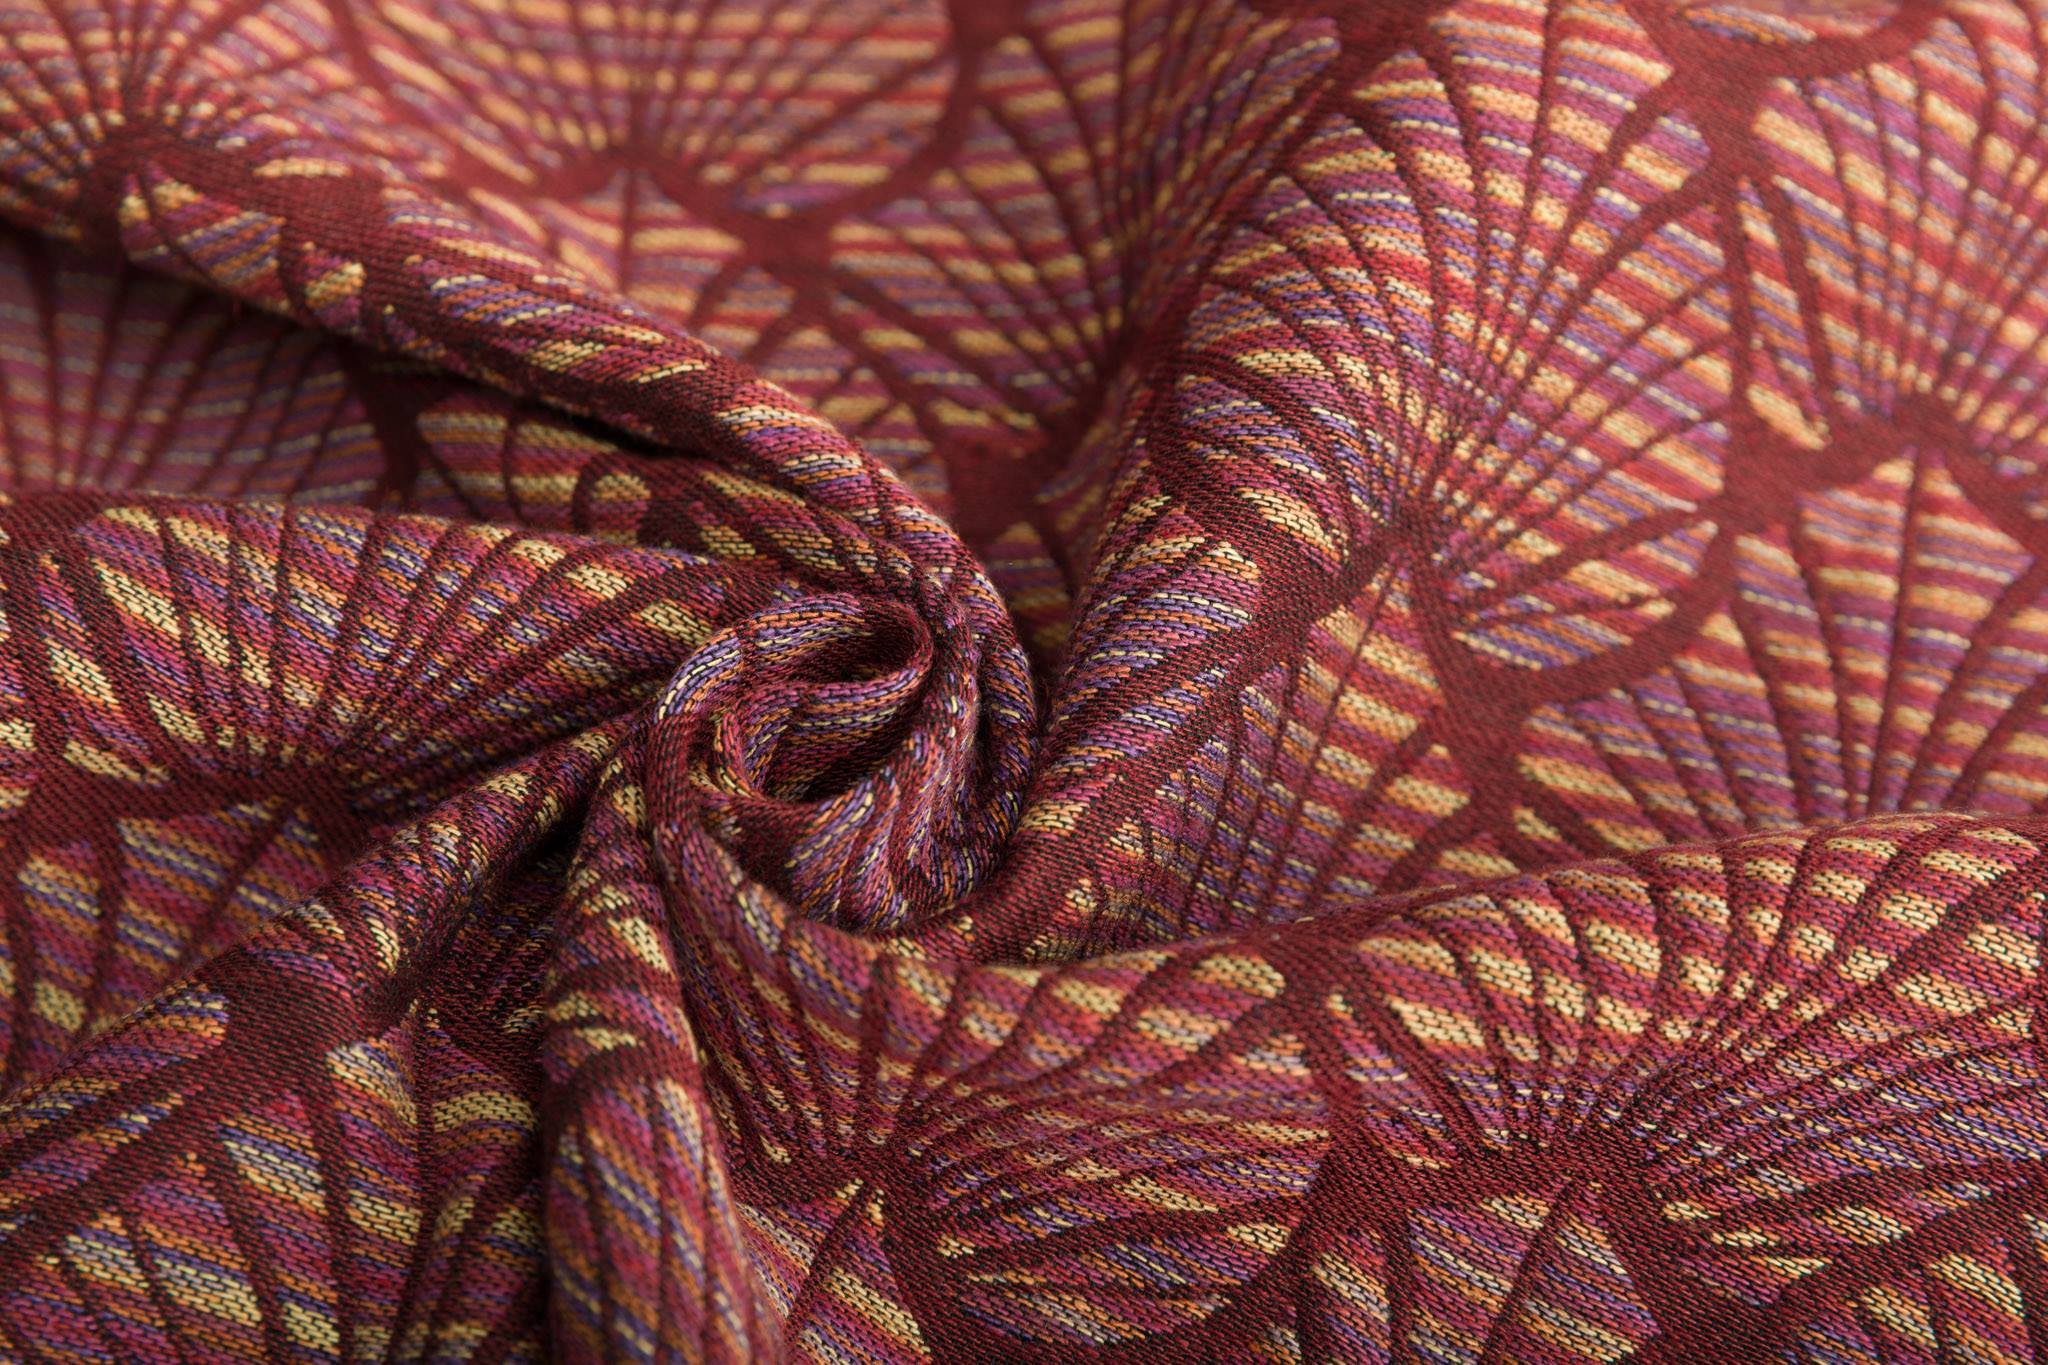 Linuschka Ipomée Ipomee Tierra De Siena (japanese silk, шерсть, лен, mulberry silk) Image